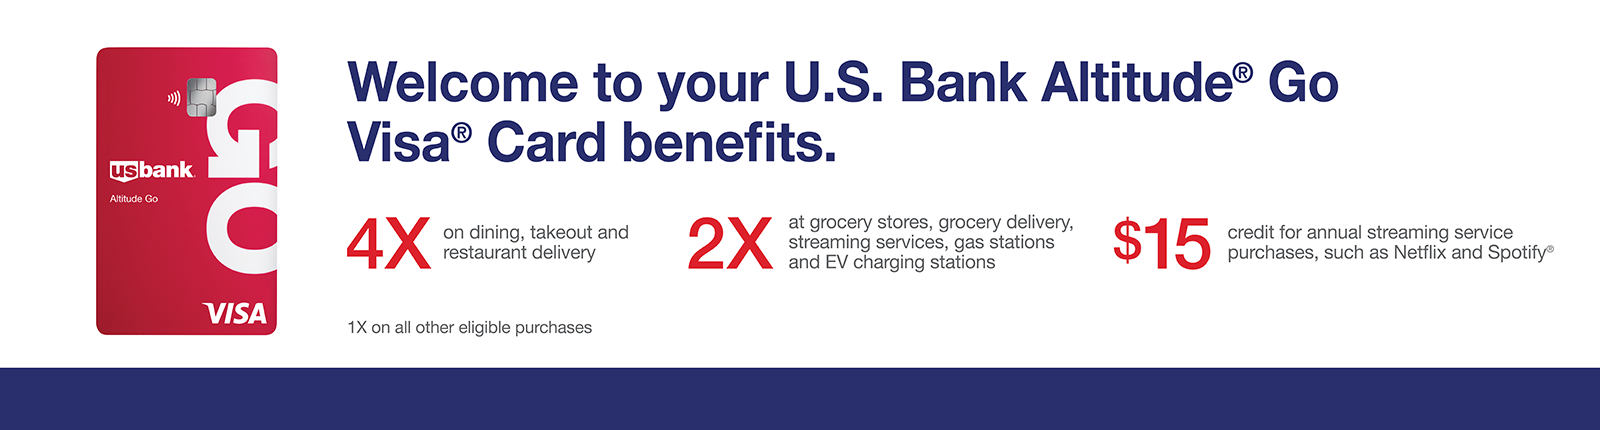 Welcome to your U.S. Bank Altitude Go Visa Card Benefits